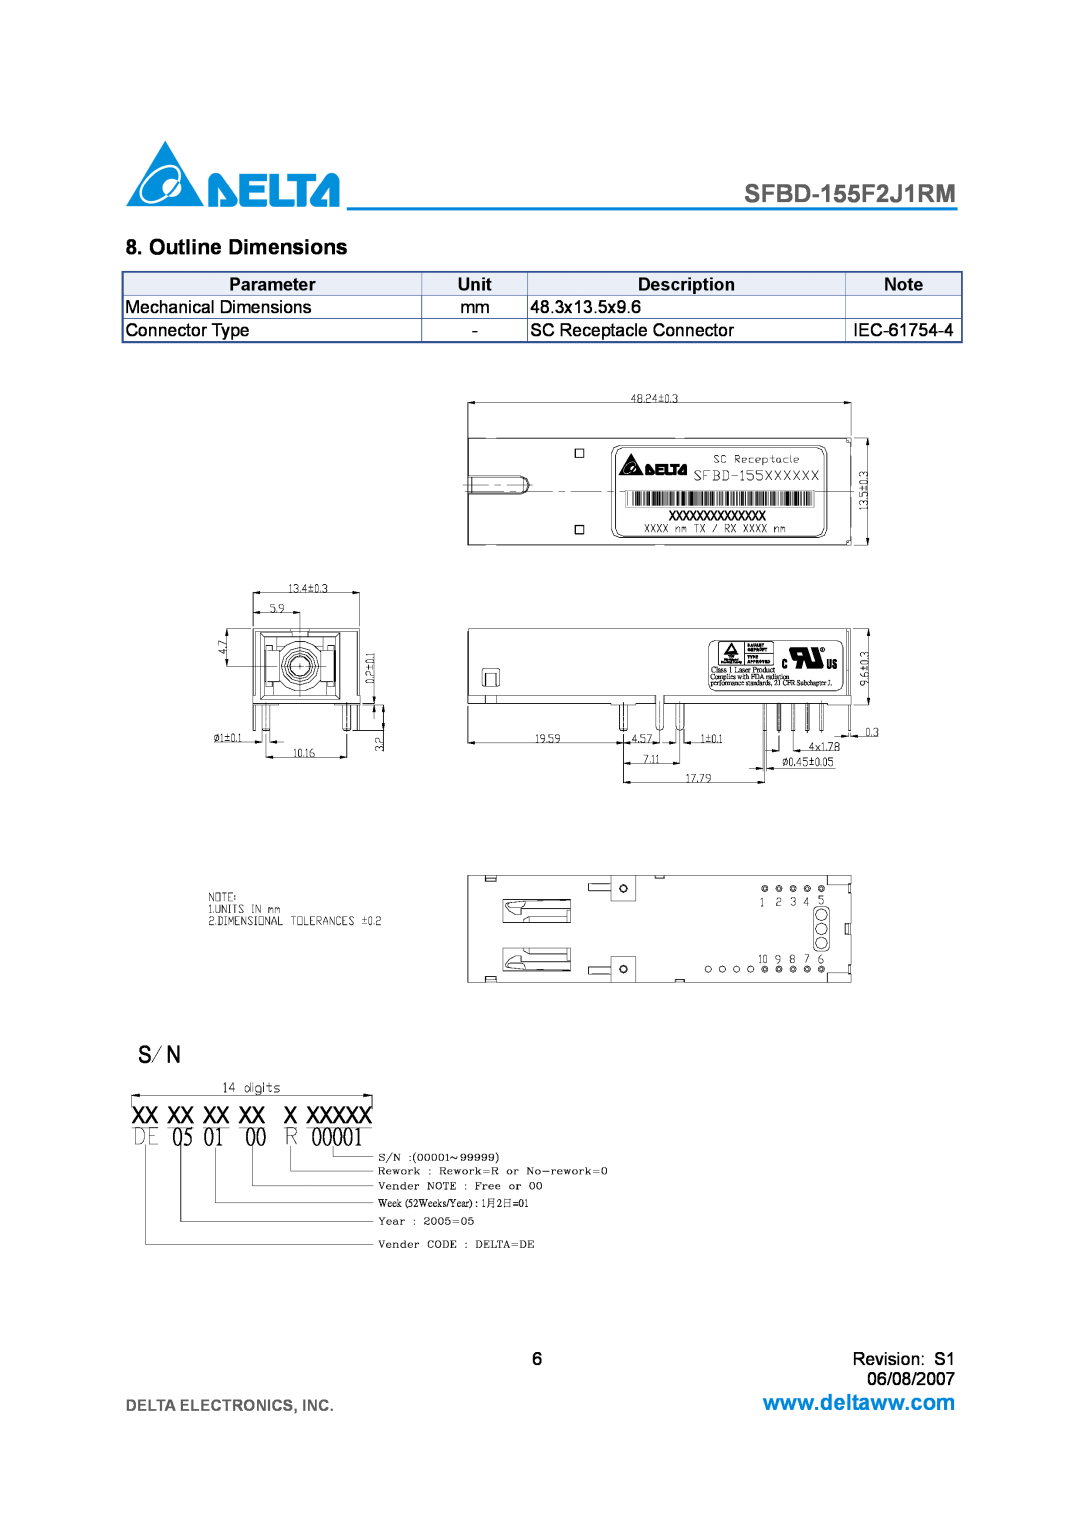 Delta Electronics SFBD-155F2J1RM manual Outline Dimensions, Parameter, Unit, Description, Delta Electronics, Inc 